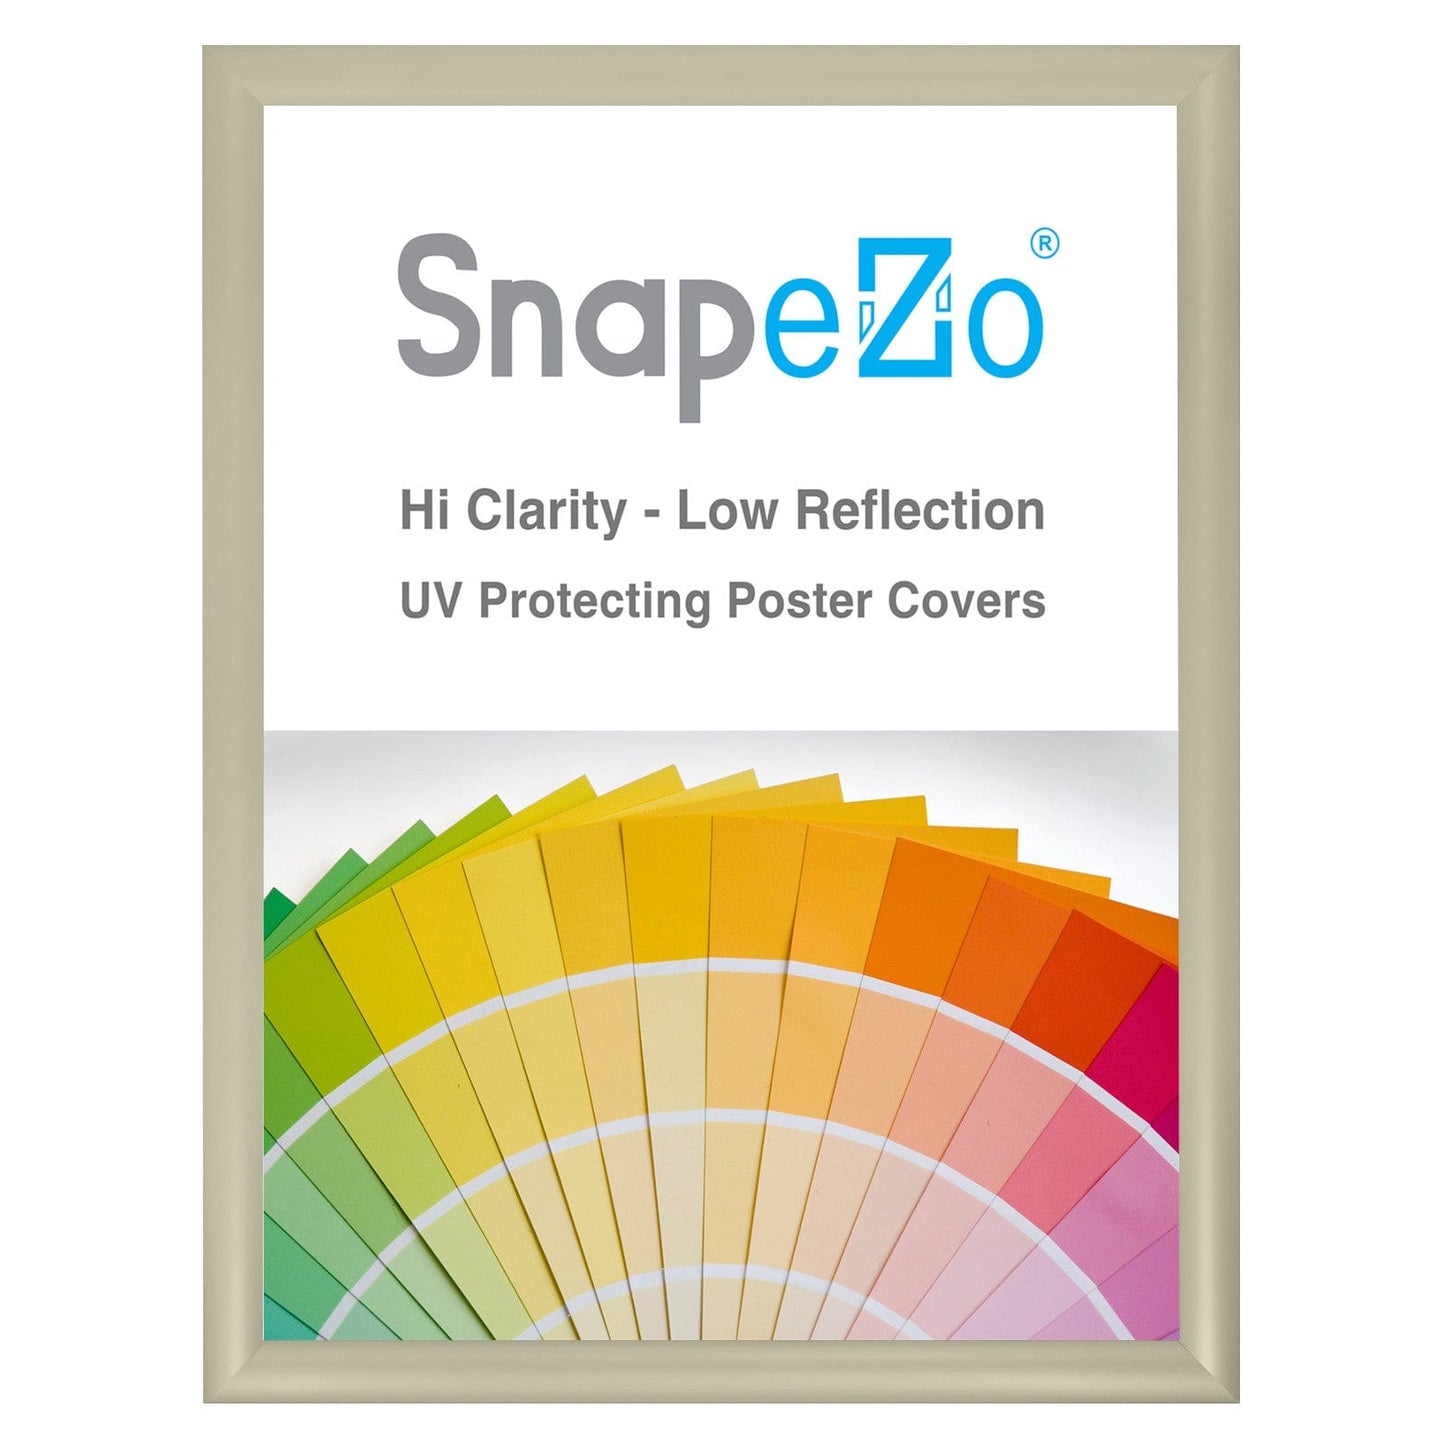 18x24 Cream SnapeZo® Snap Frame - 1.2" Profile - Snap Frames Direct